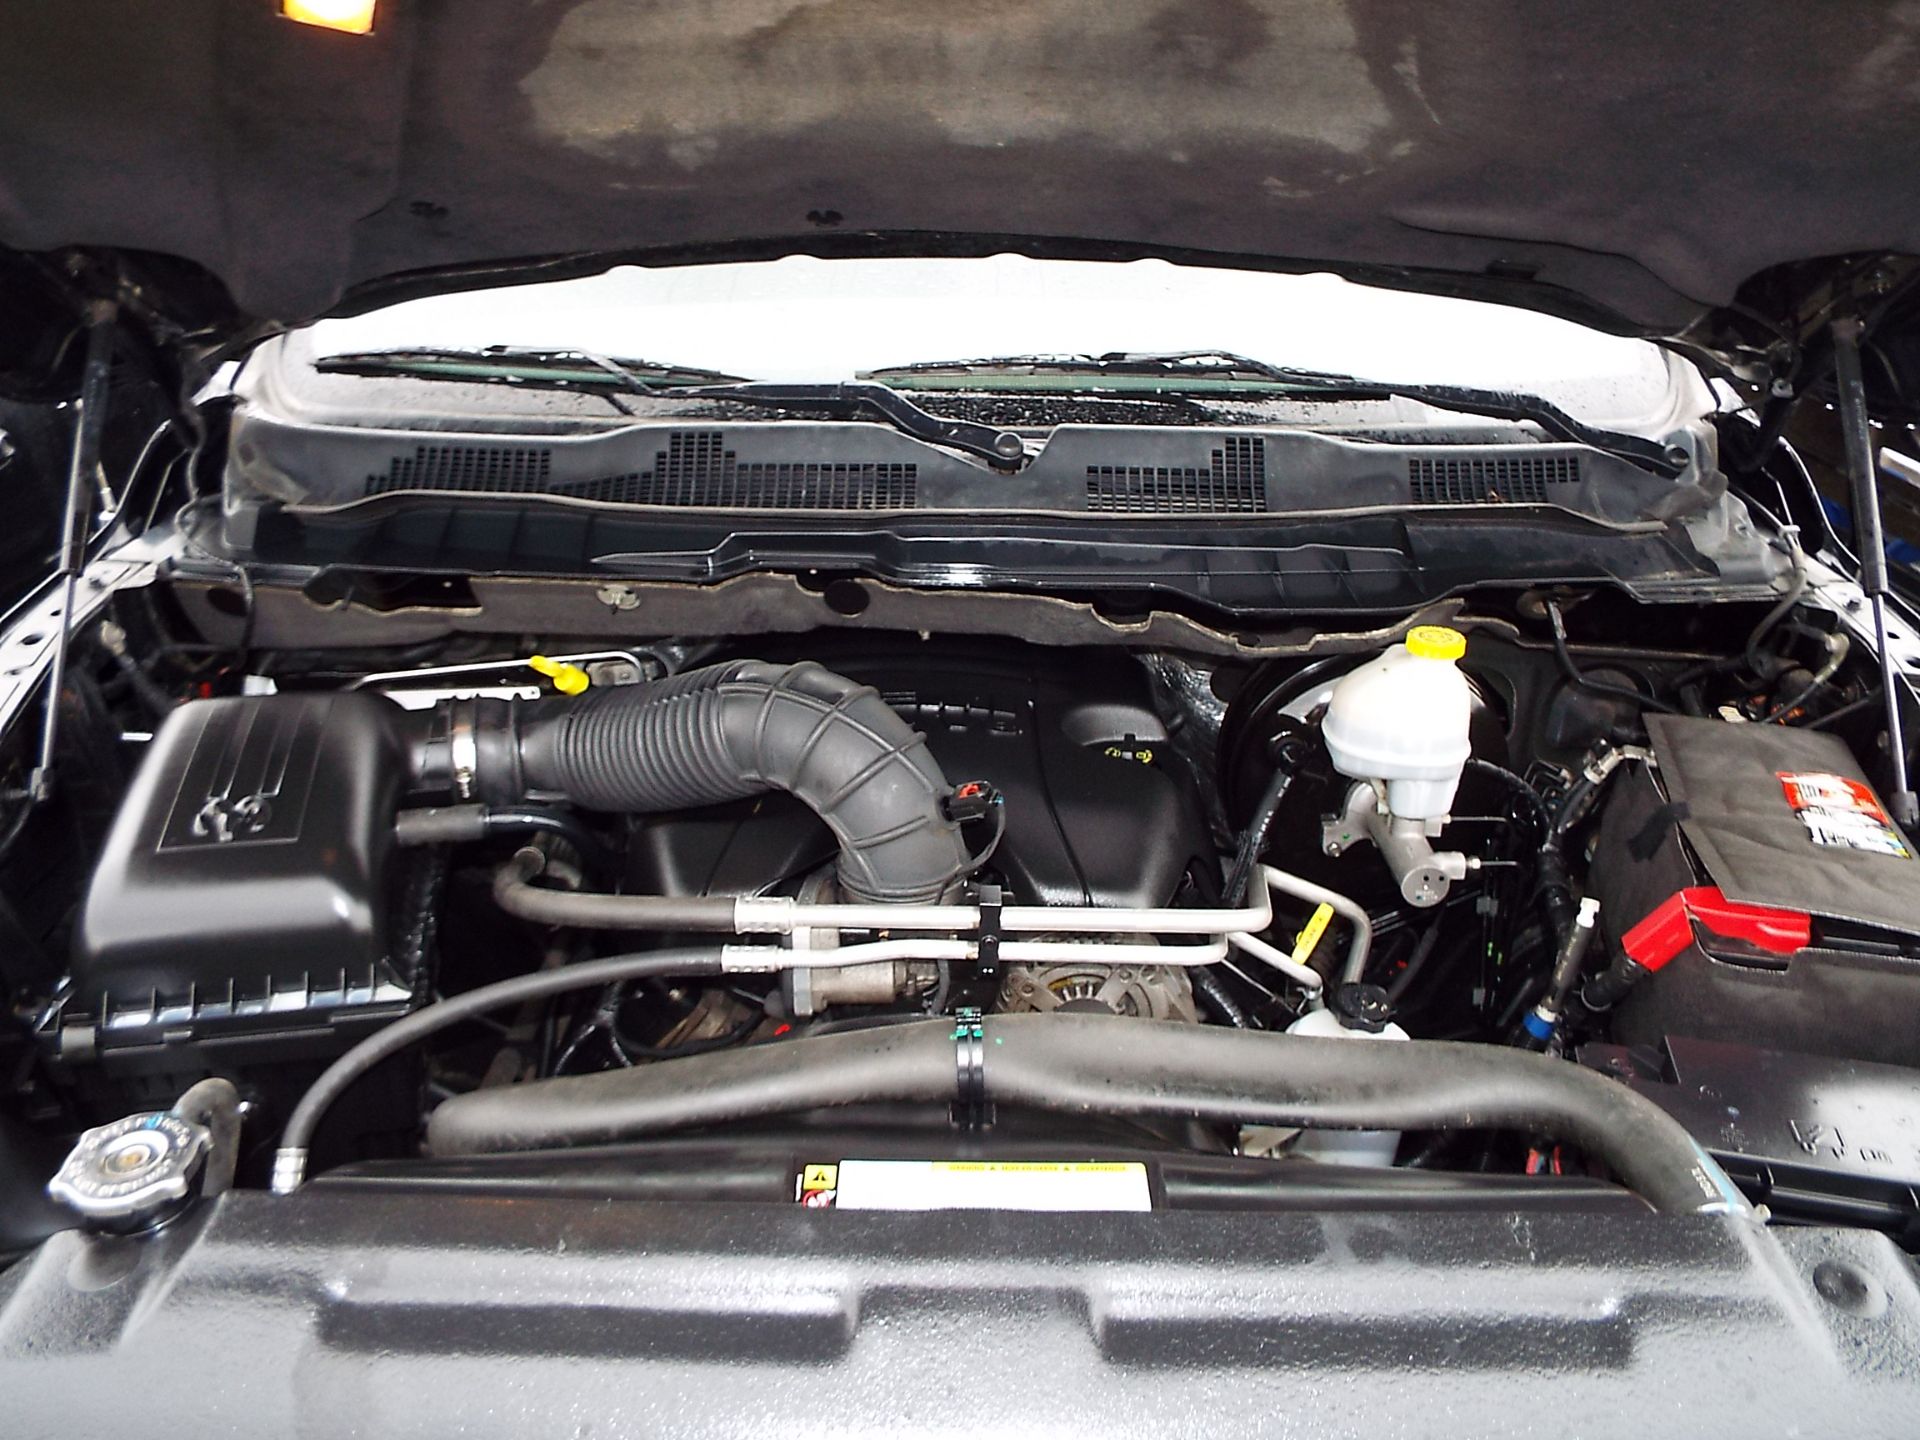 DODGE (2011) RAM 1500 SLT PICKUP TRUCK, CREW CAB, HEMI 5.7 LITER V8 ENGINE, 4X4, AUTO, POWER - Image 3 of 6